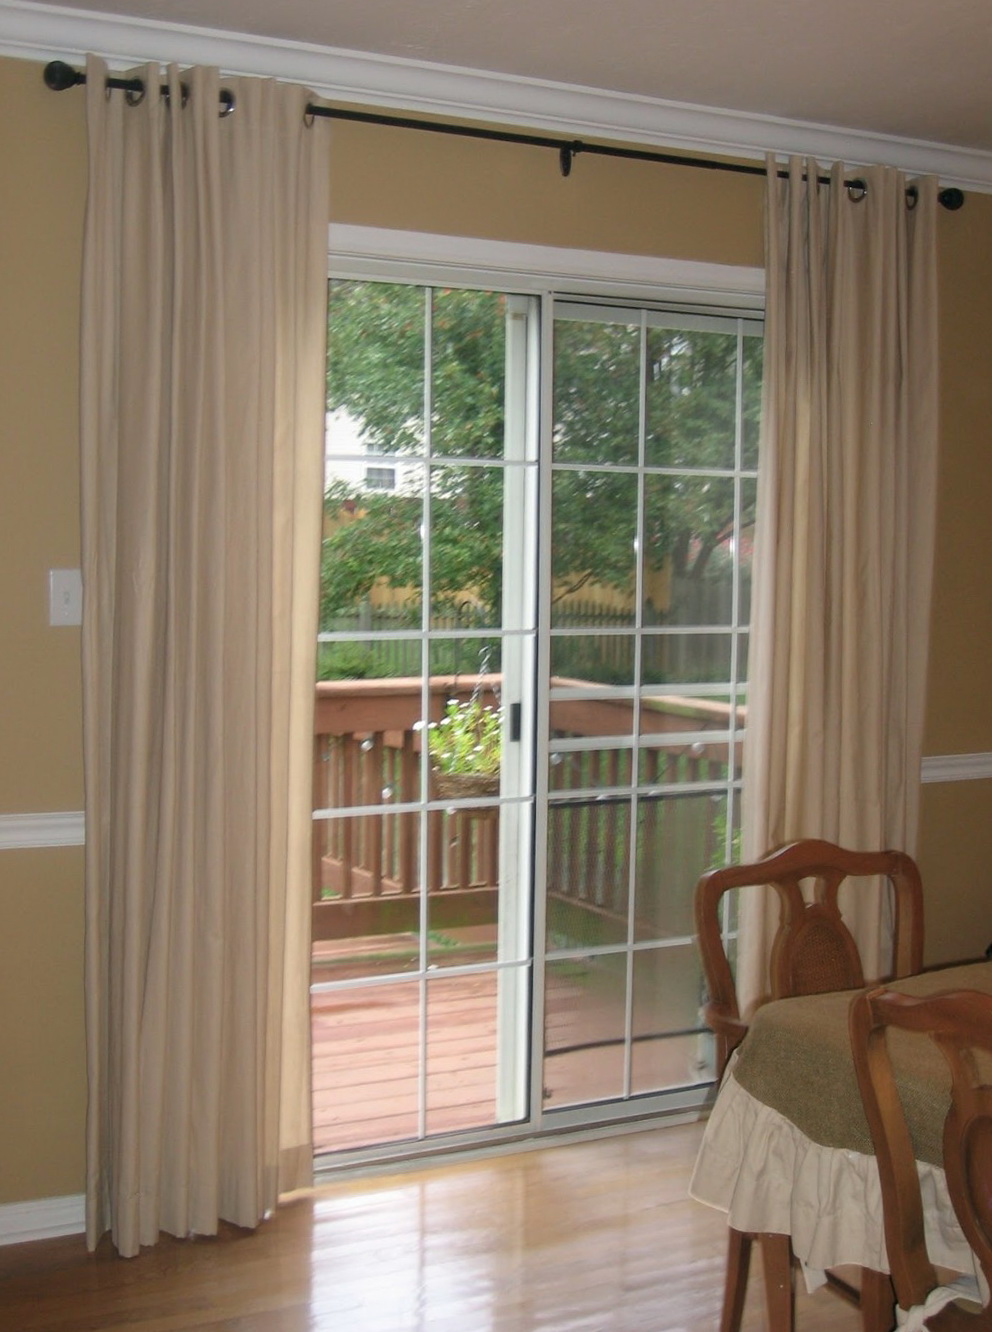 Standard Curtain Length For Sliding Glass Door | Home Design Ideas